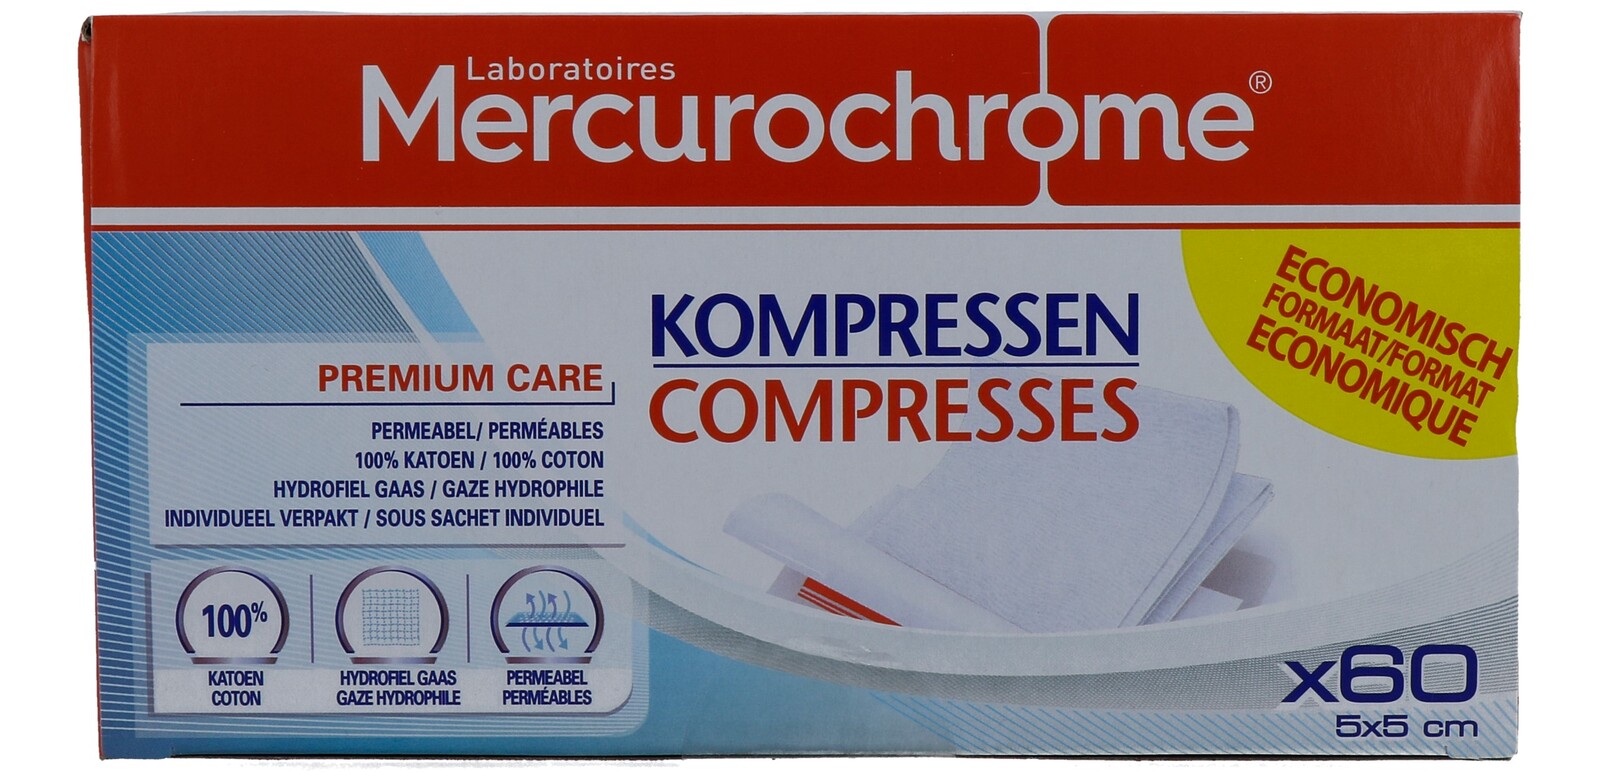 Mercurochrome Kompressen 5x5cm